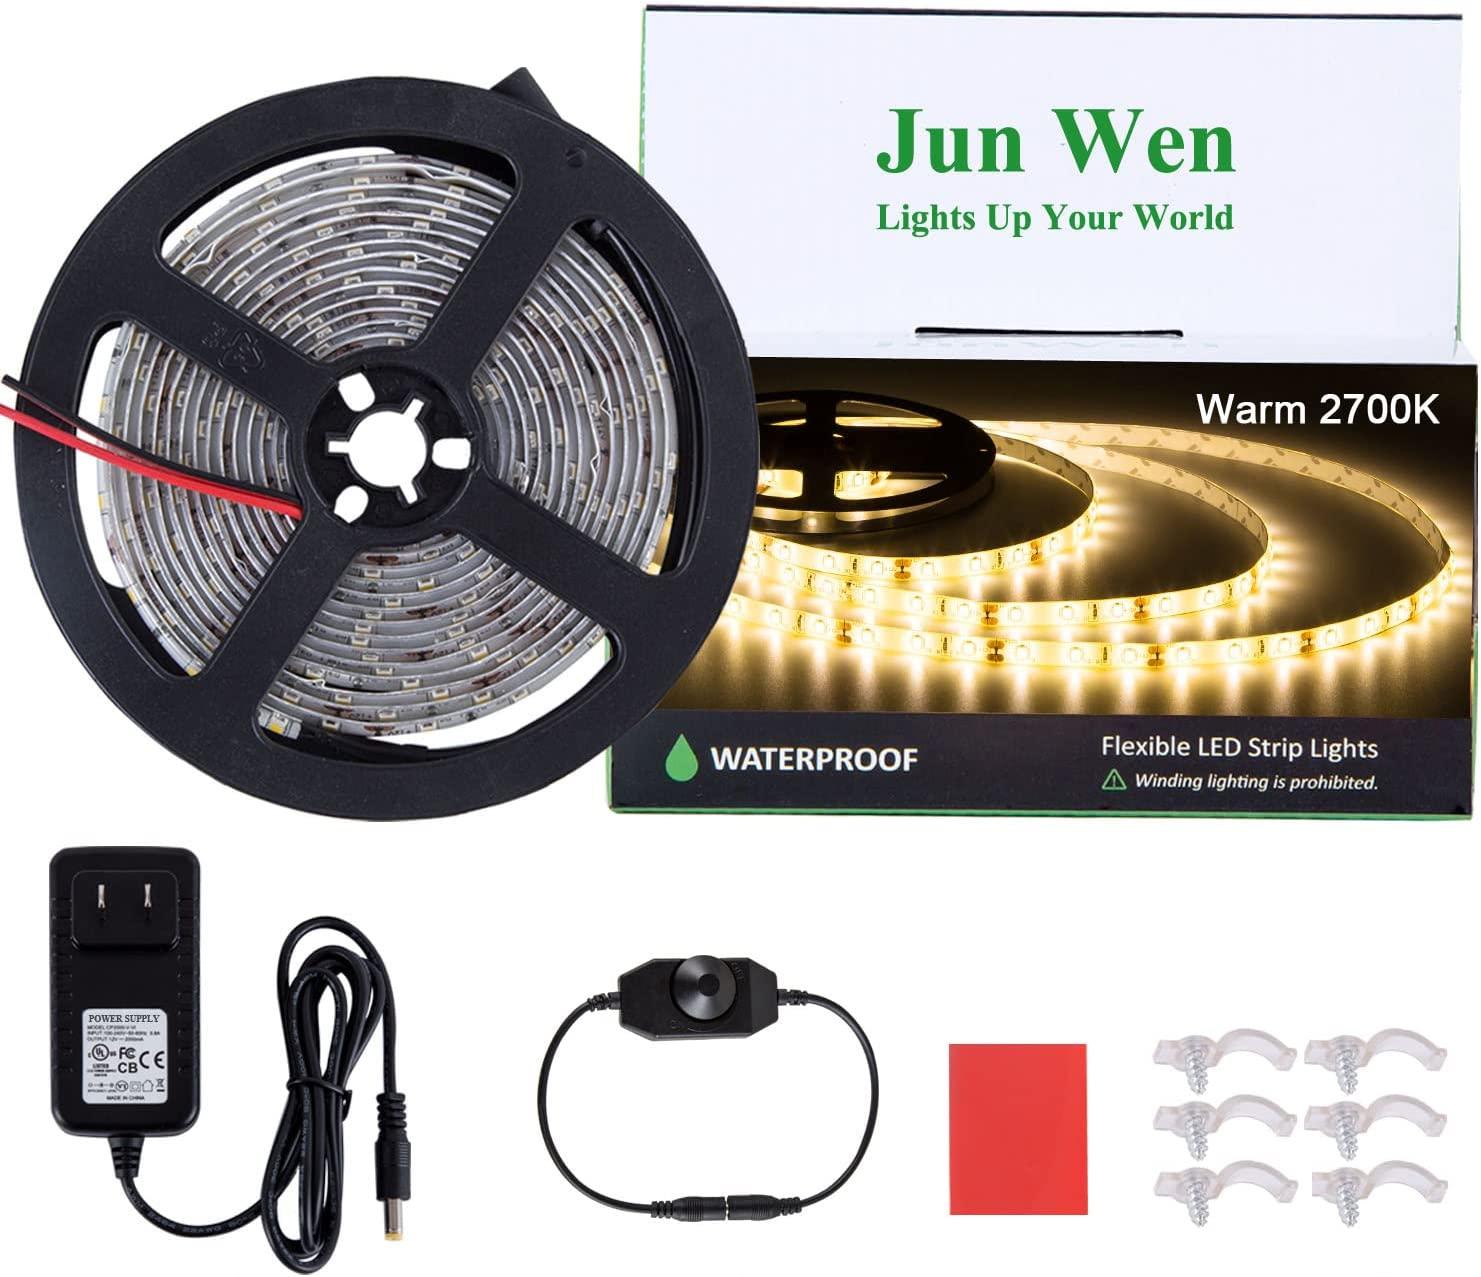 waterproof LED strip lights- Jun Wen